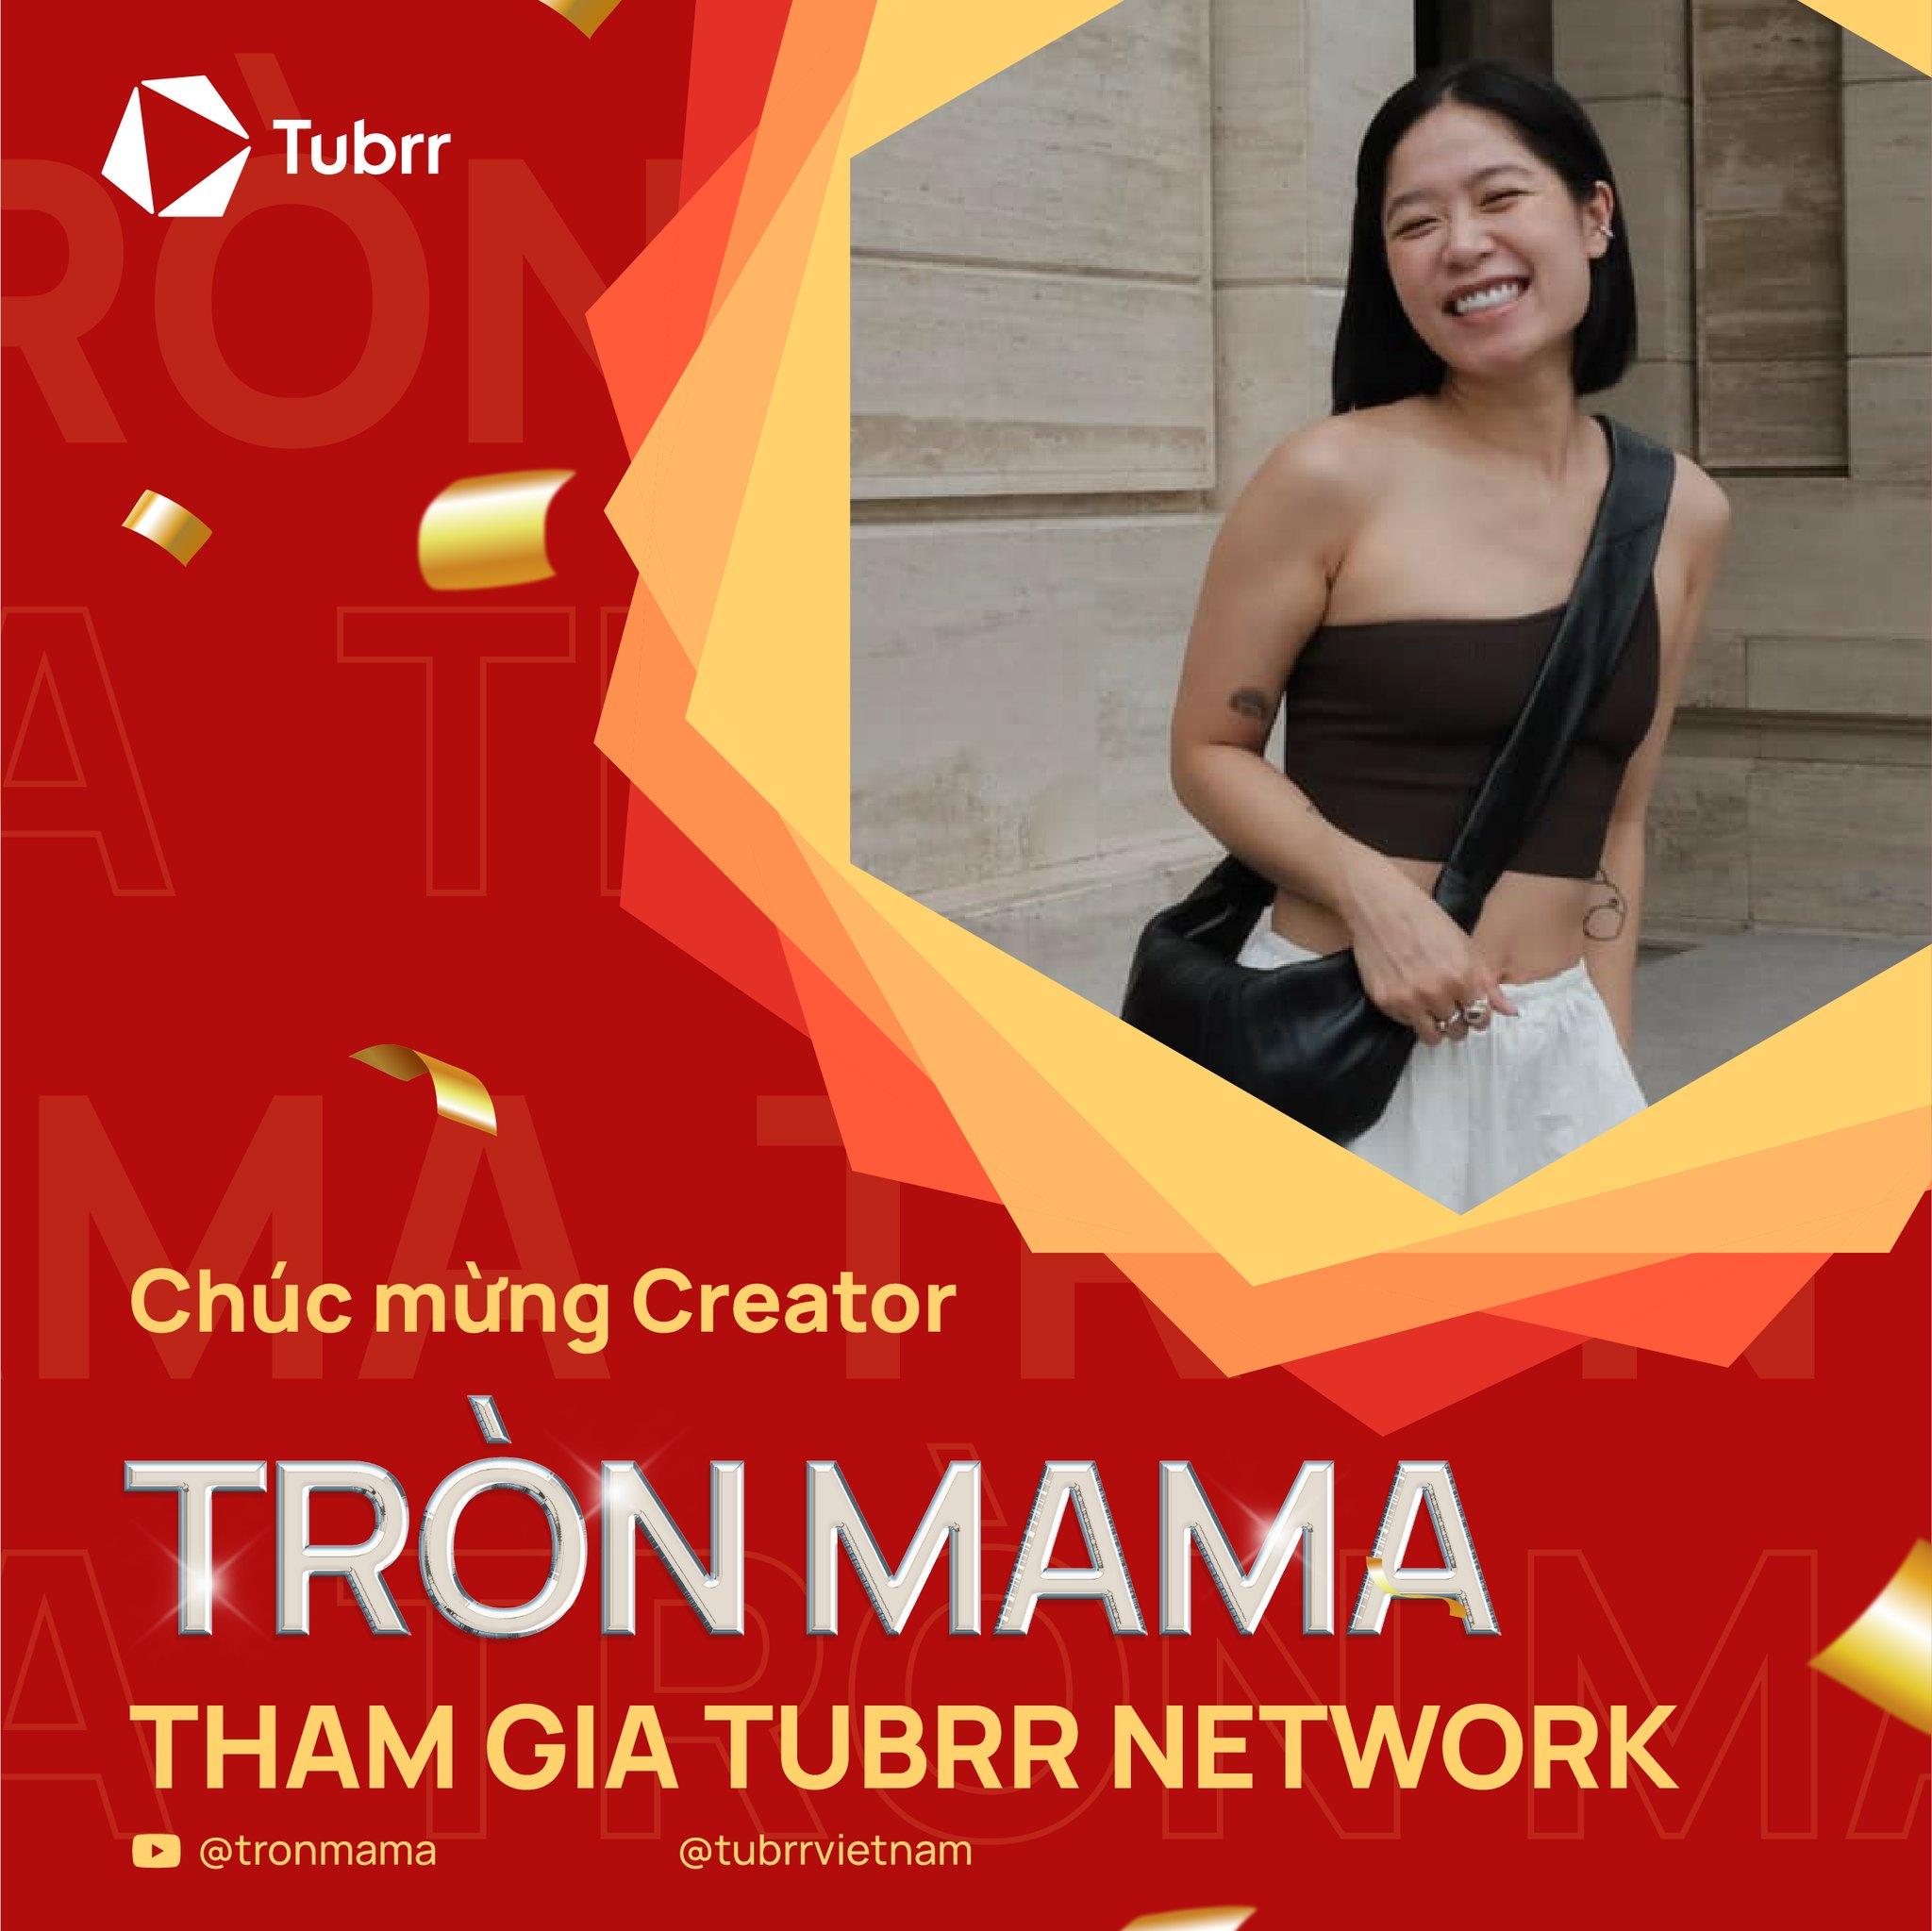 creator in Tubrr network